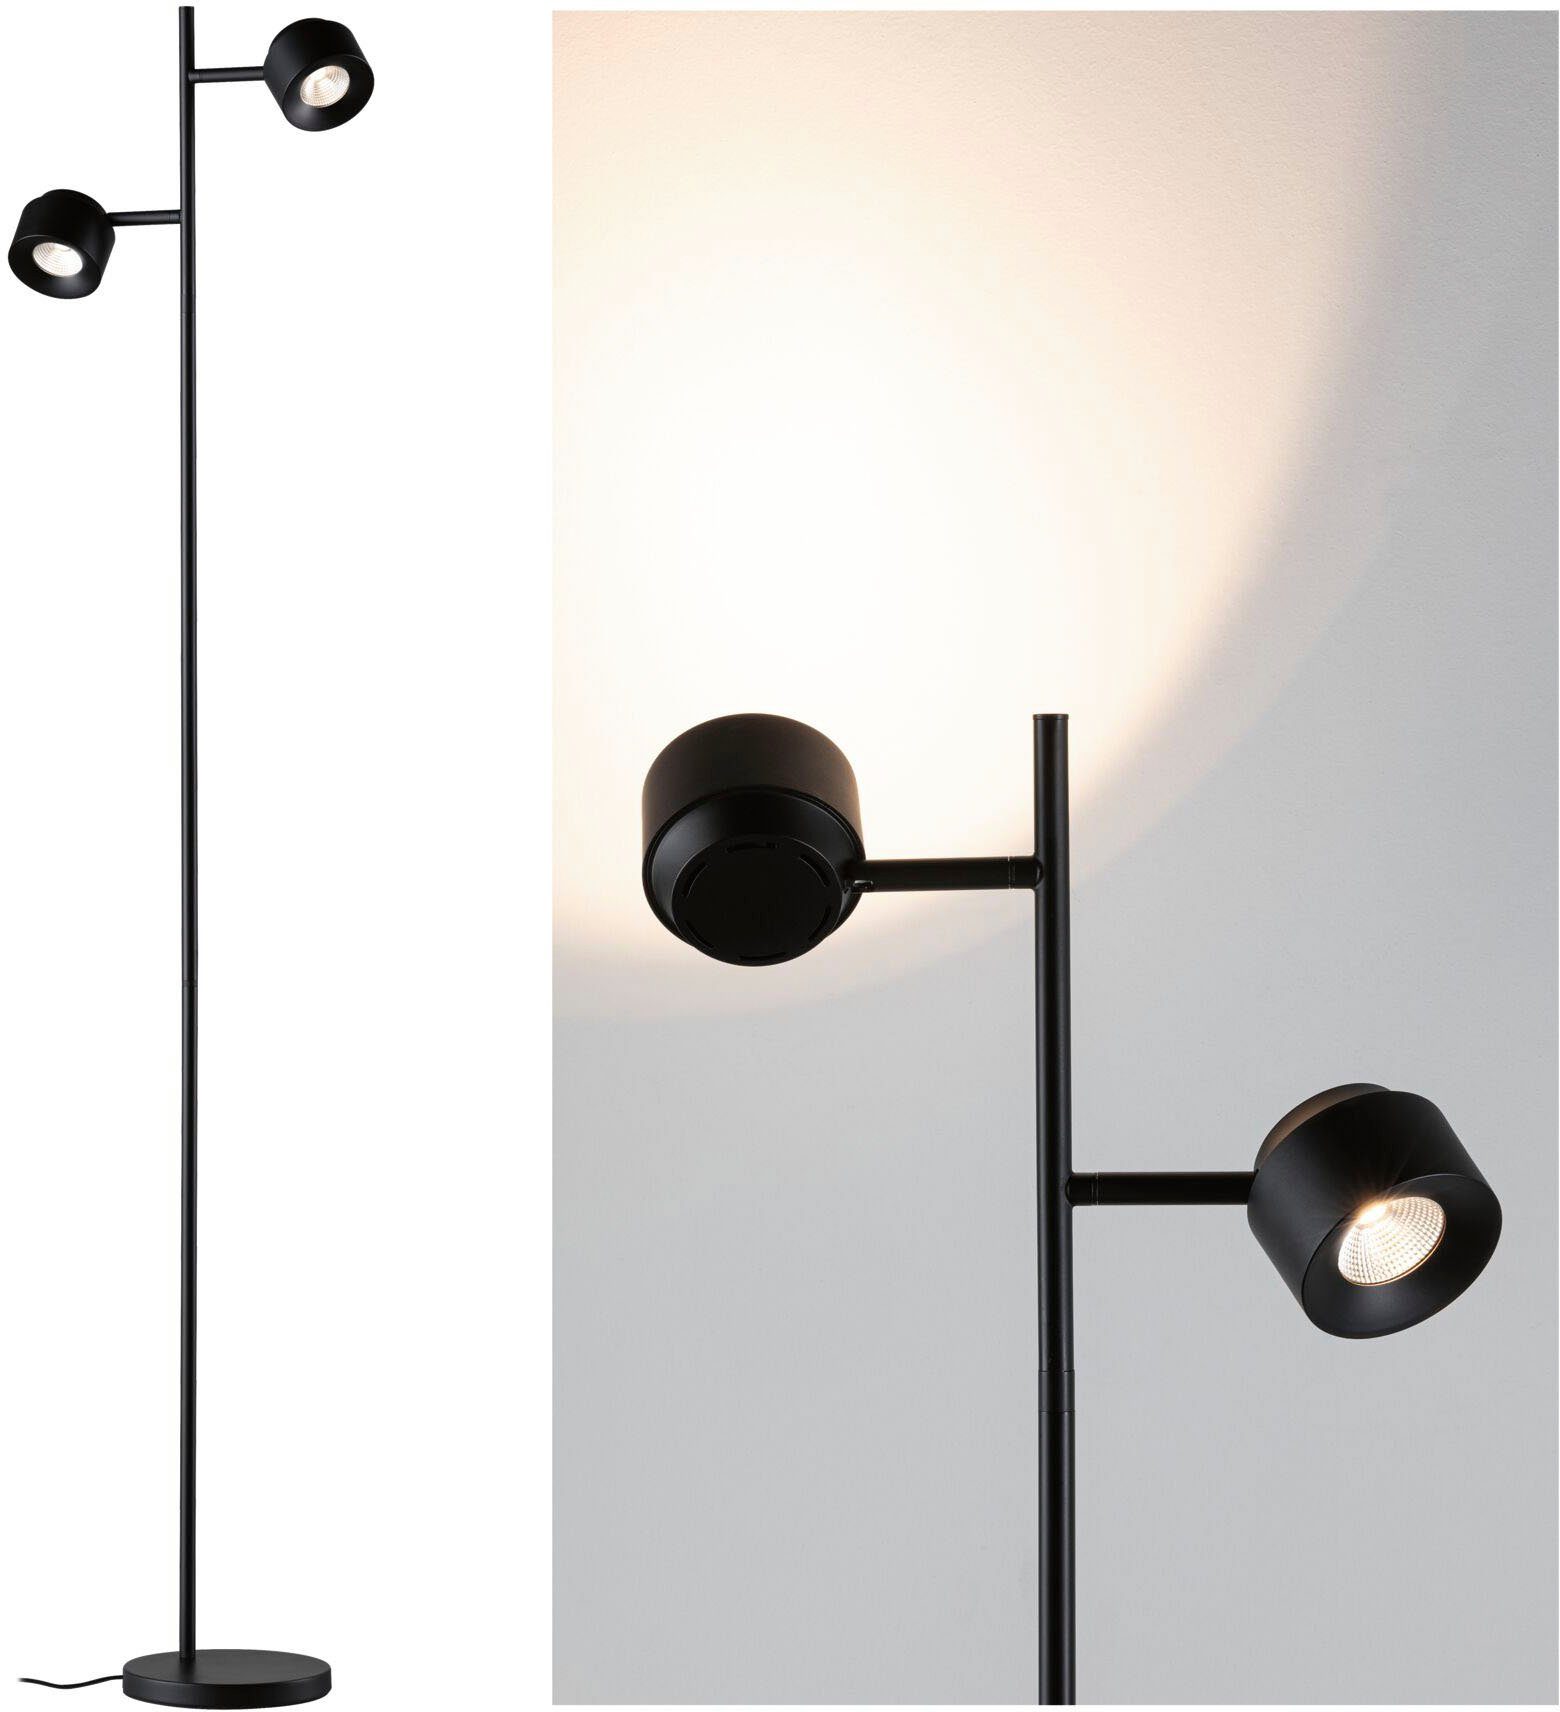 Paulmann 3-Step fest Puric dimmbar Warmweiß, Pane, integriert, LED Stehlampe